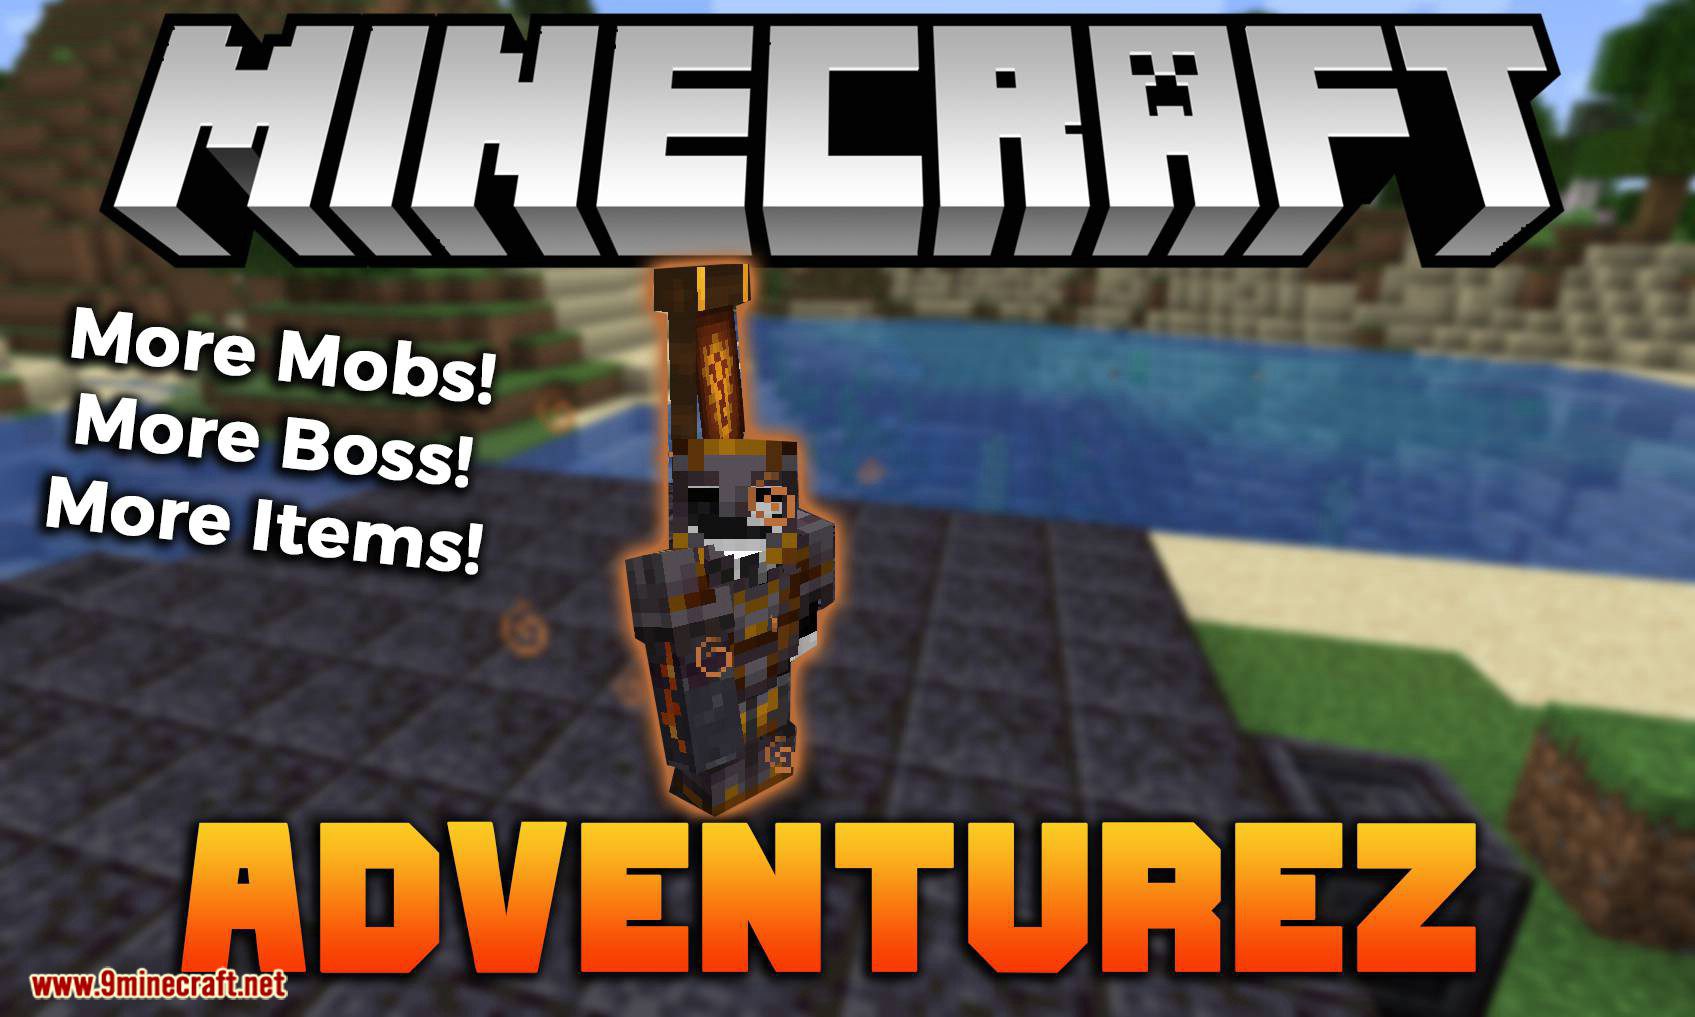 Adventurez Mod 1 19 1 18 2 More Mobs Bosses Items 9minecraft Net